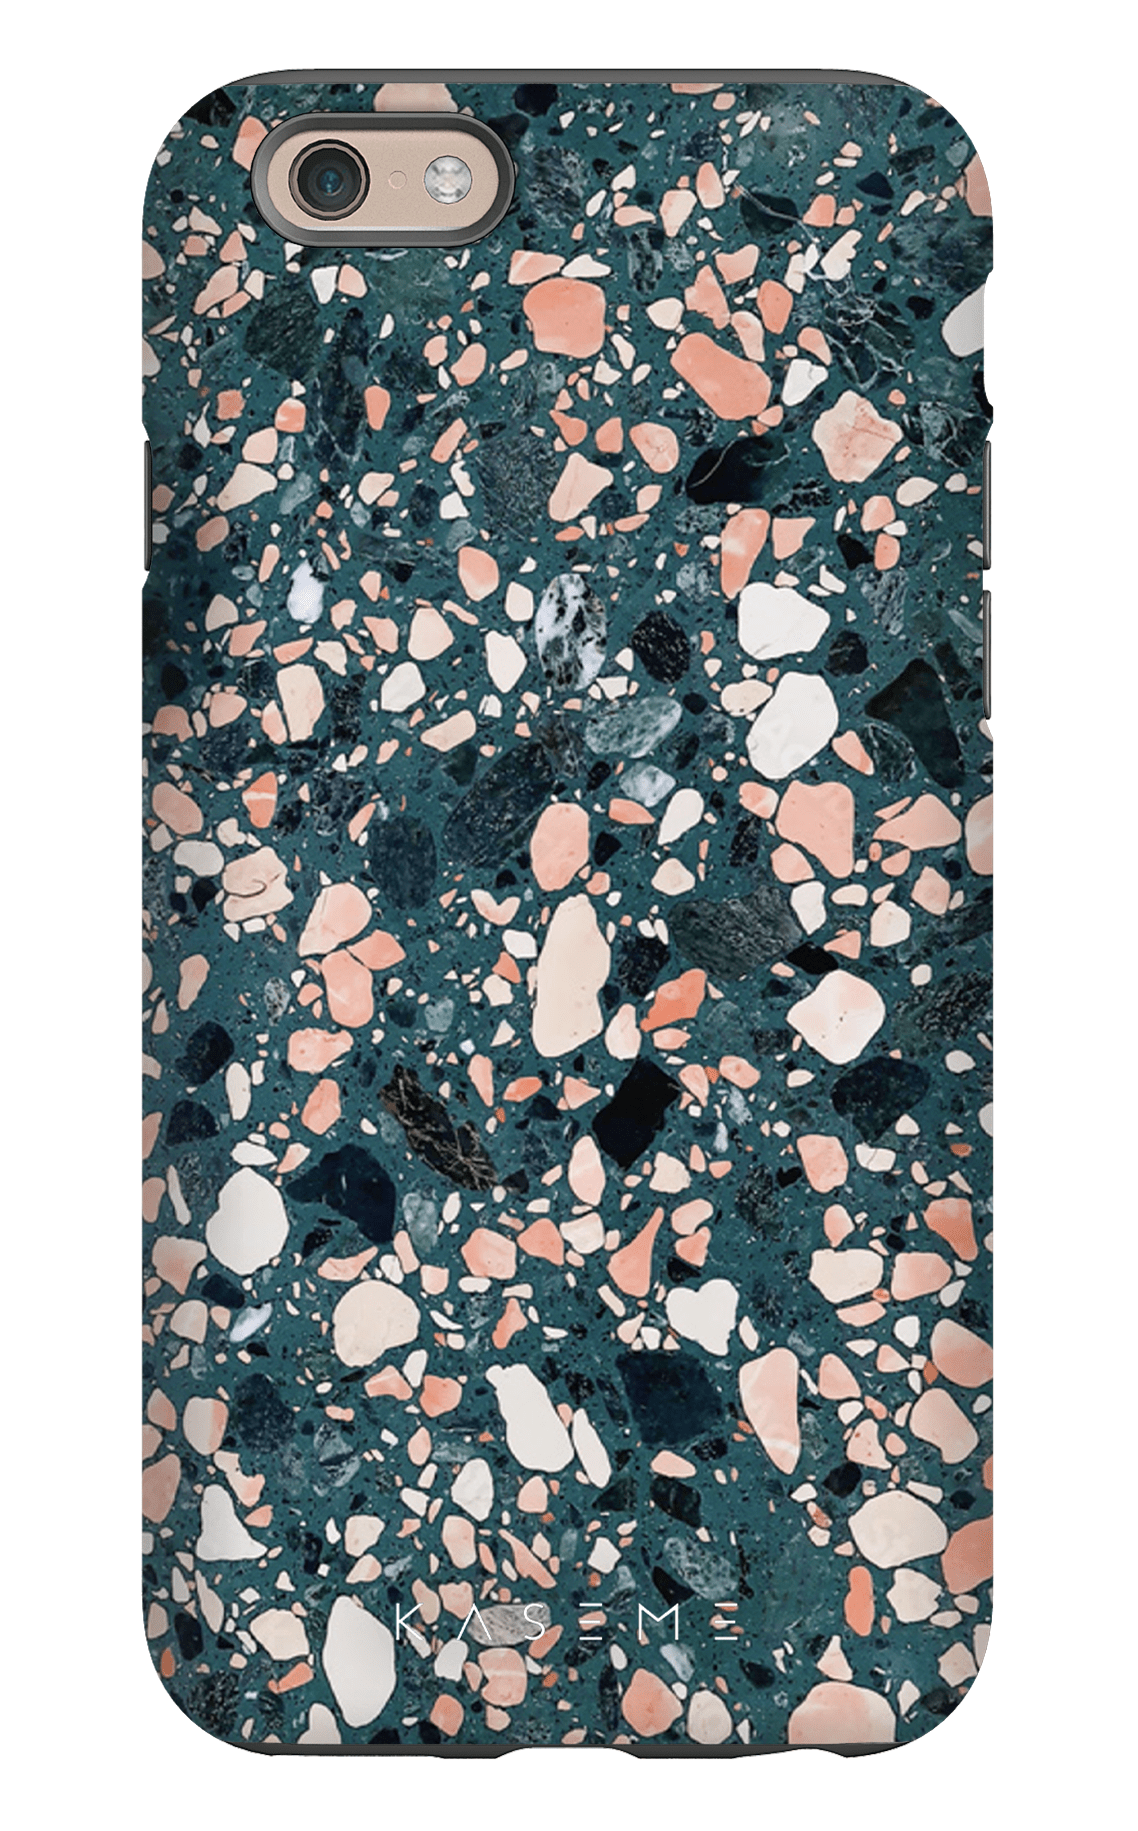 Frozen stone gray - iPhone 6/6s